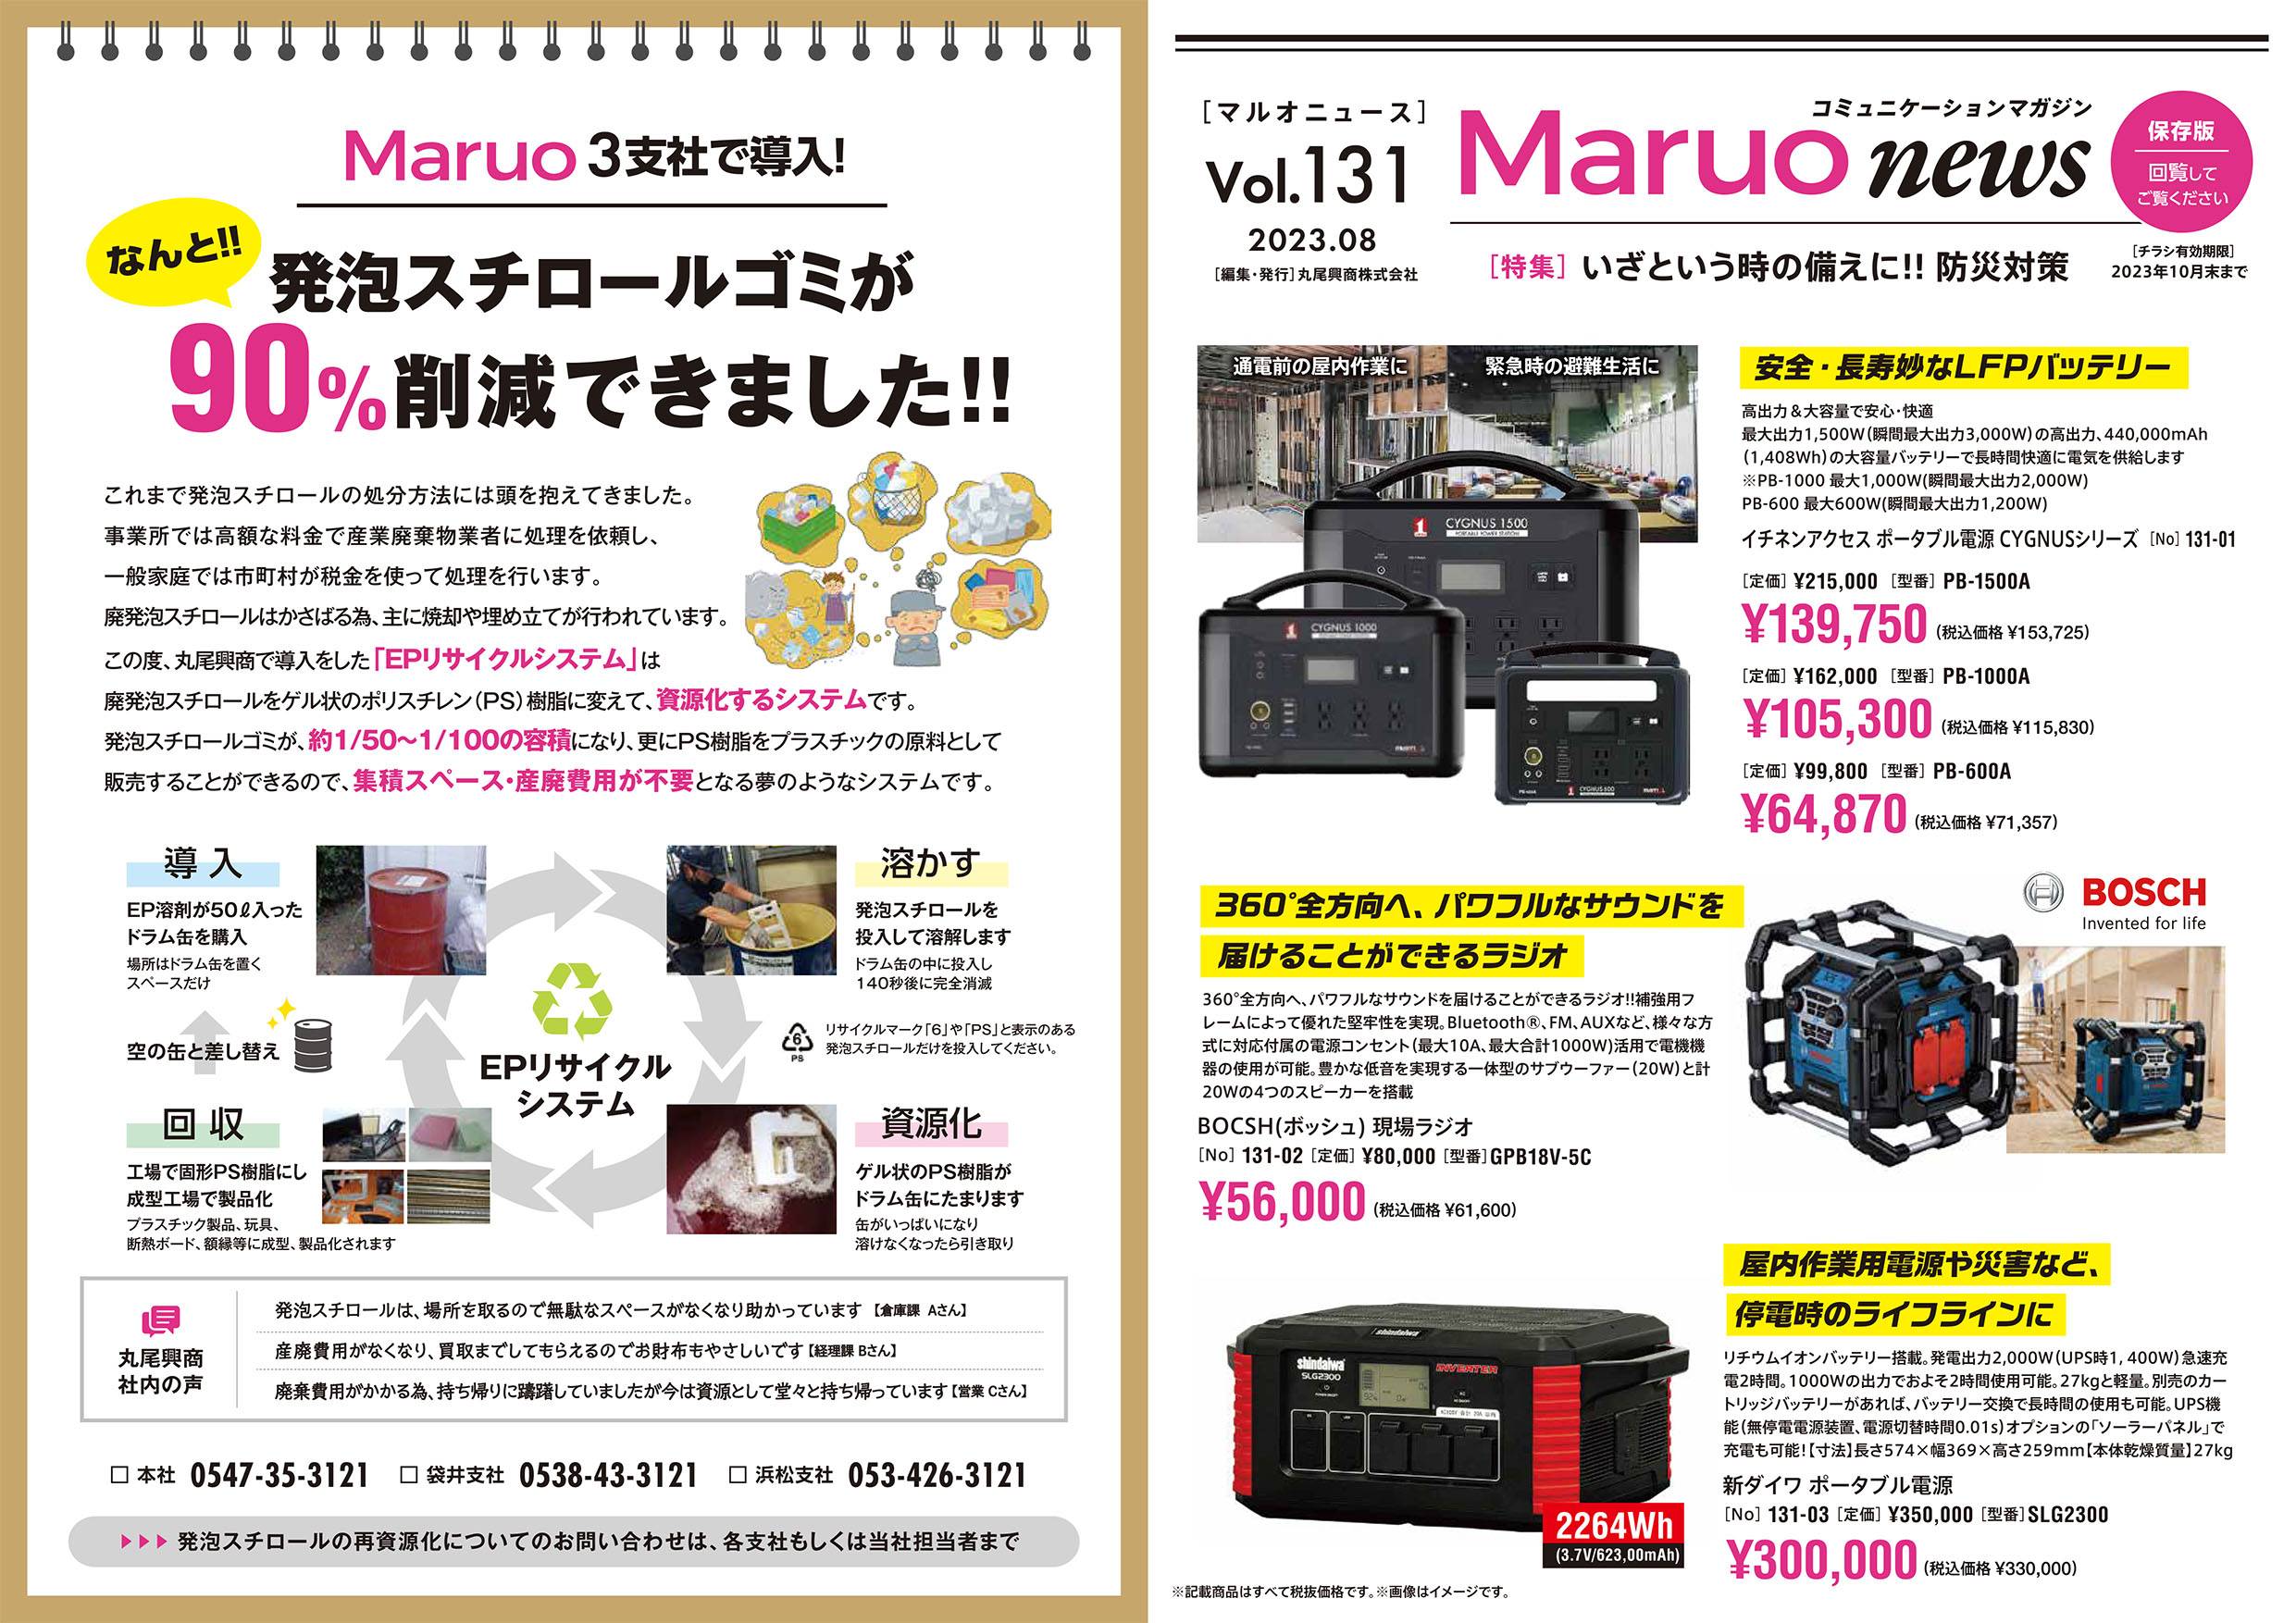 Maruo news Vol.131 松井トーヨー住建のイベントキャンペーン 写真1